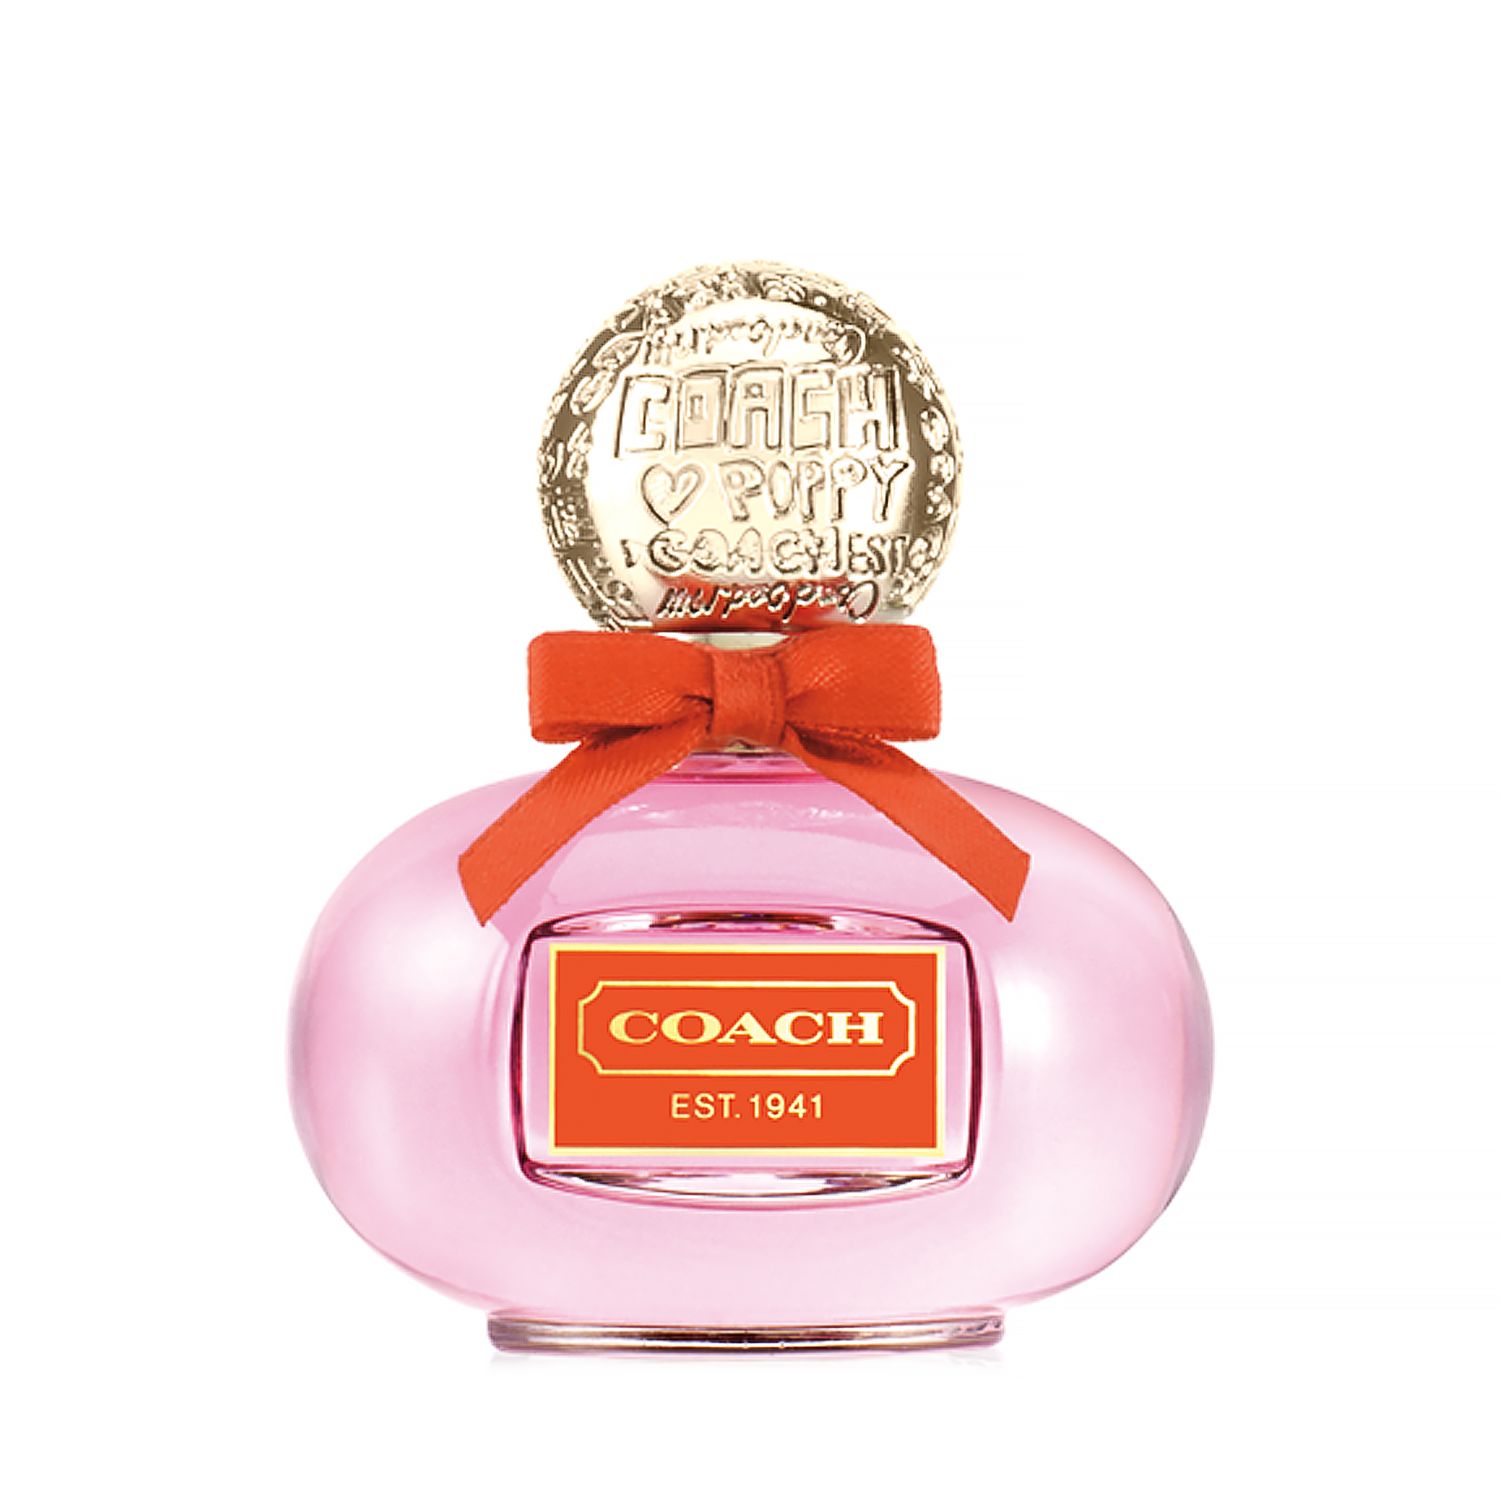 Prada Candy Women's Perfume - Eau de Parfum